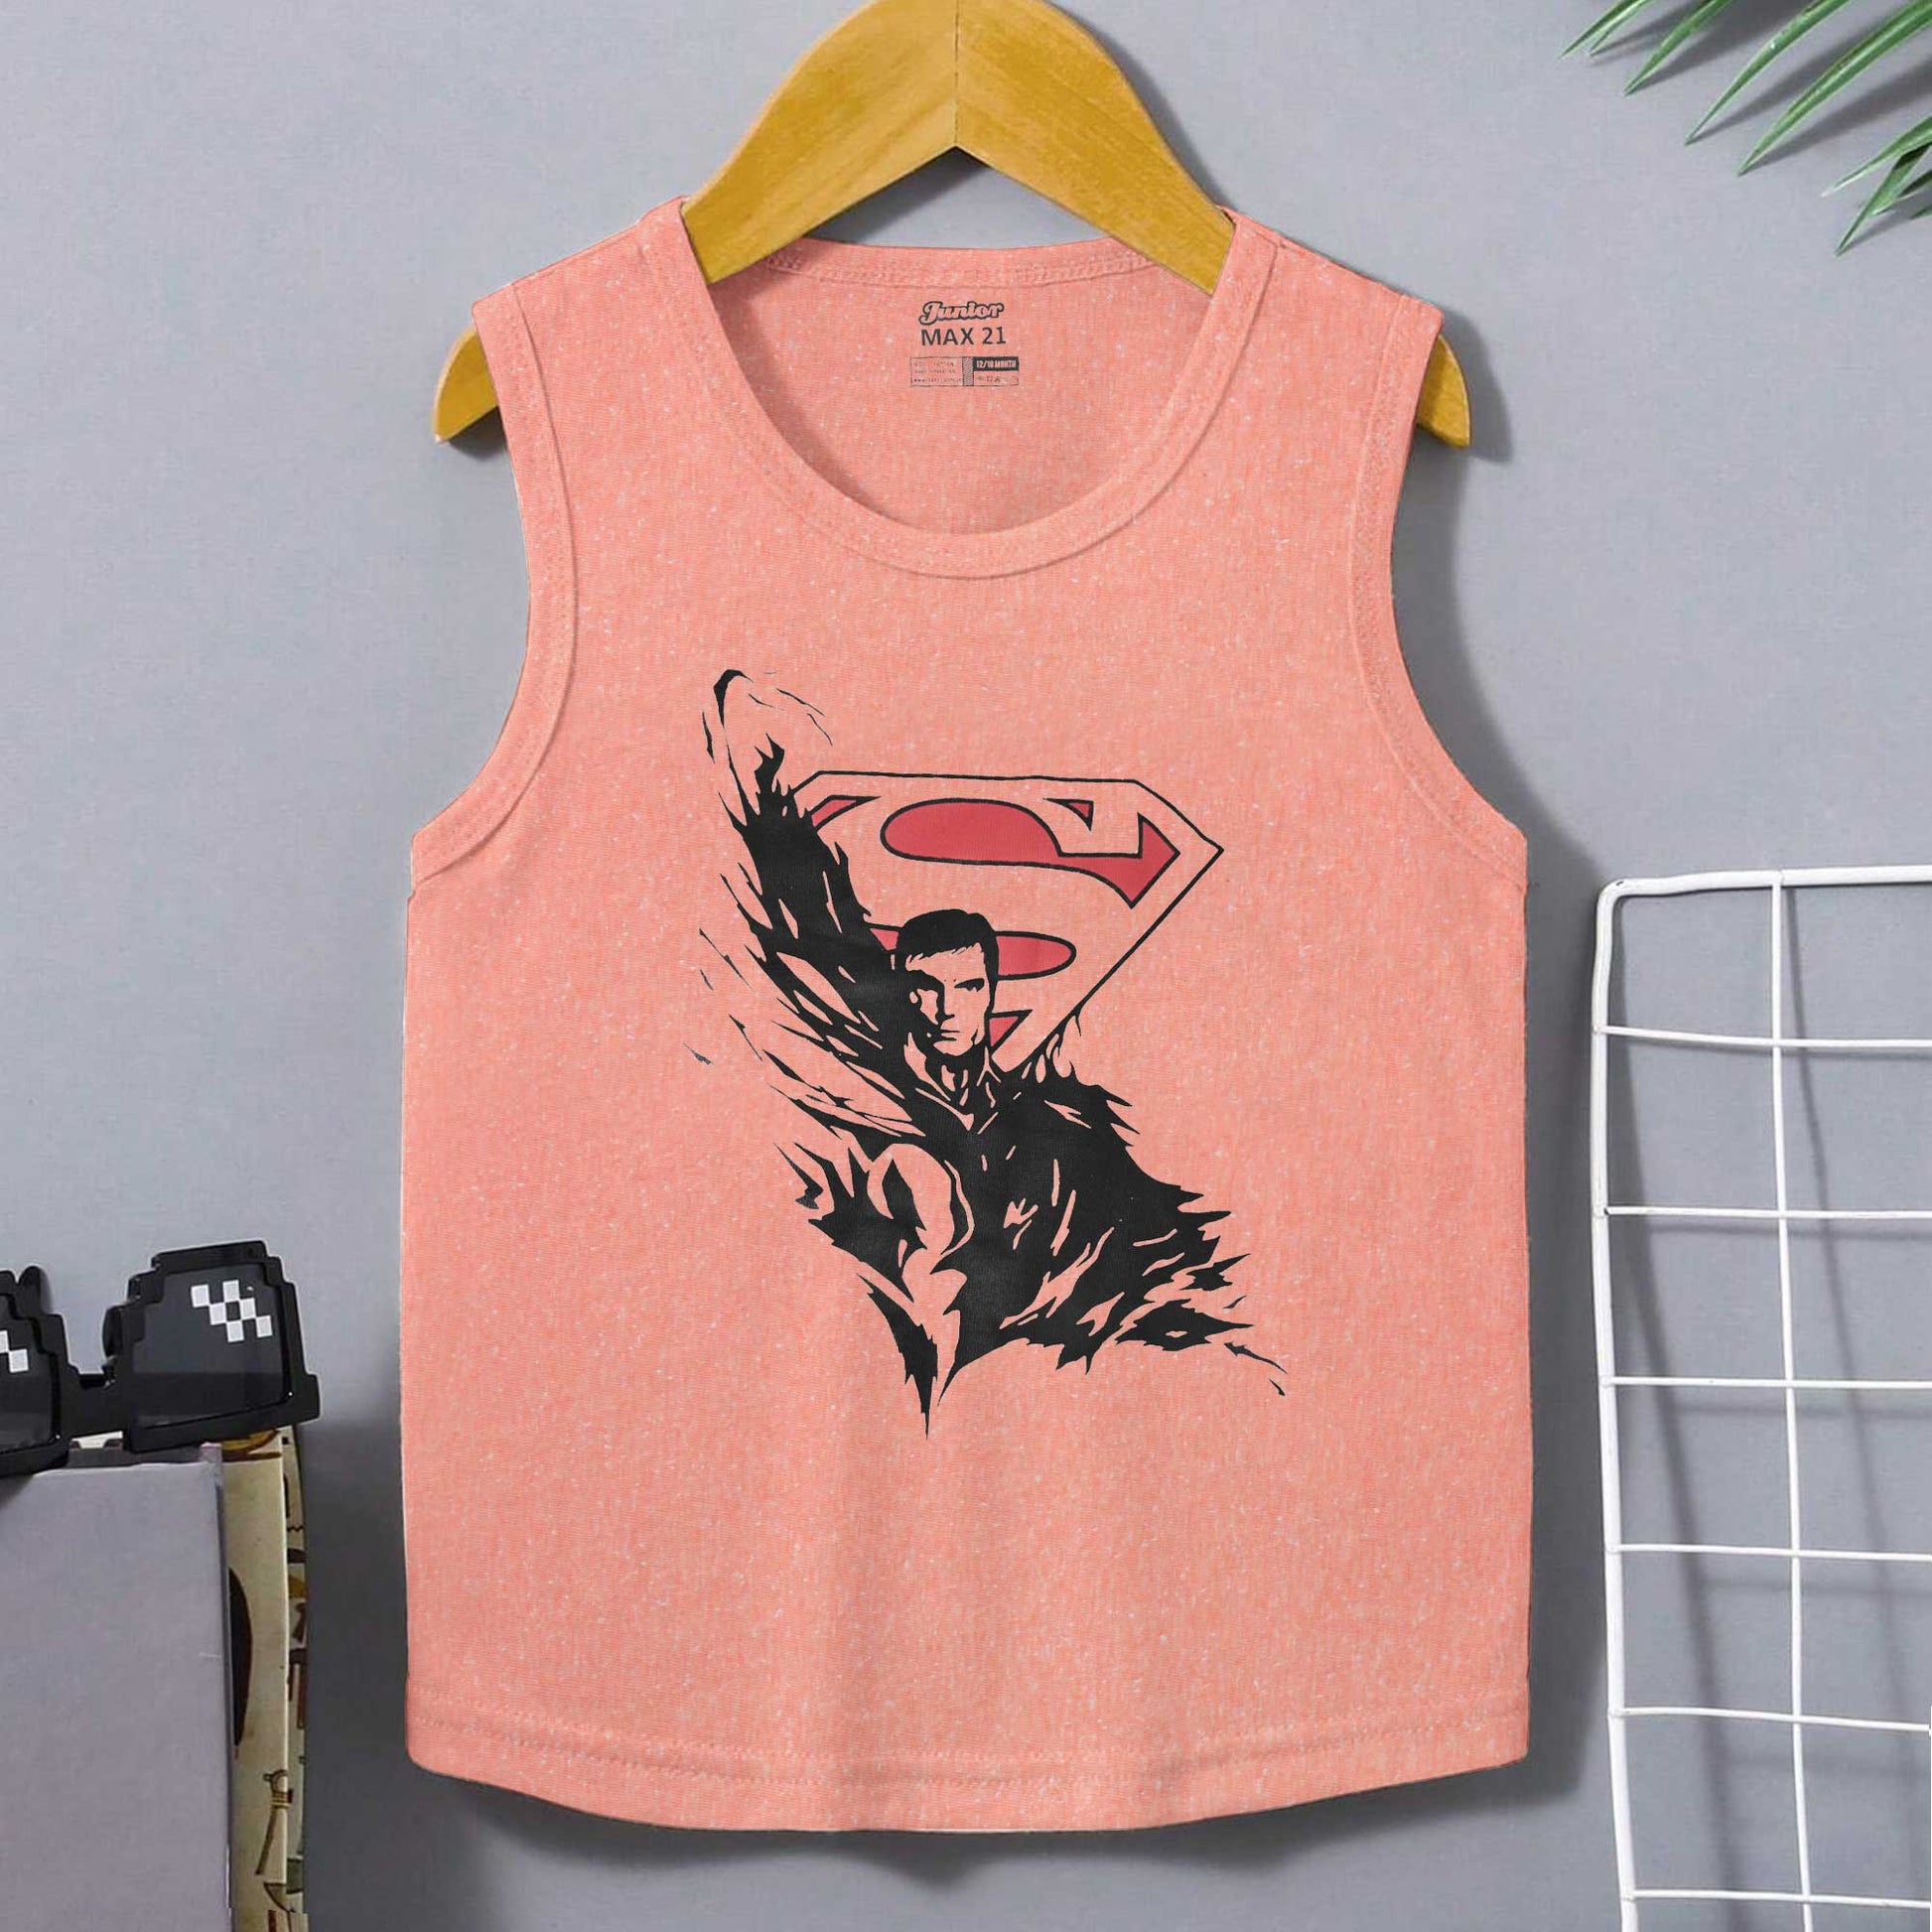 Junior Boy's Superman Printed Tank Top Girl's Tee Shirt SZK Peach 3-6 Months 